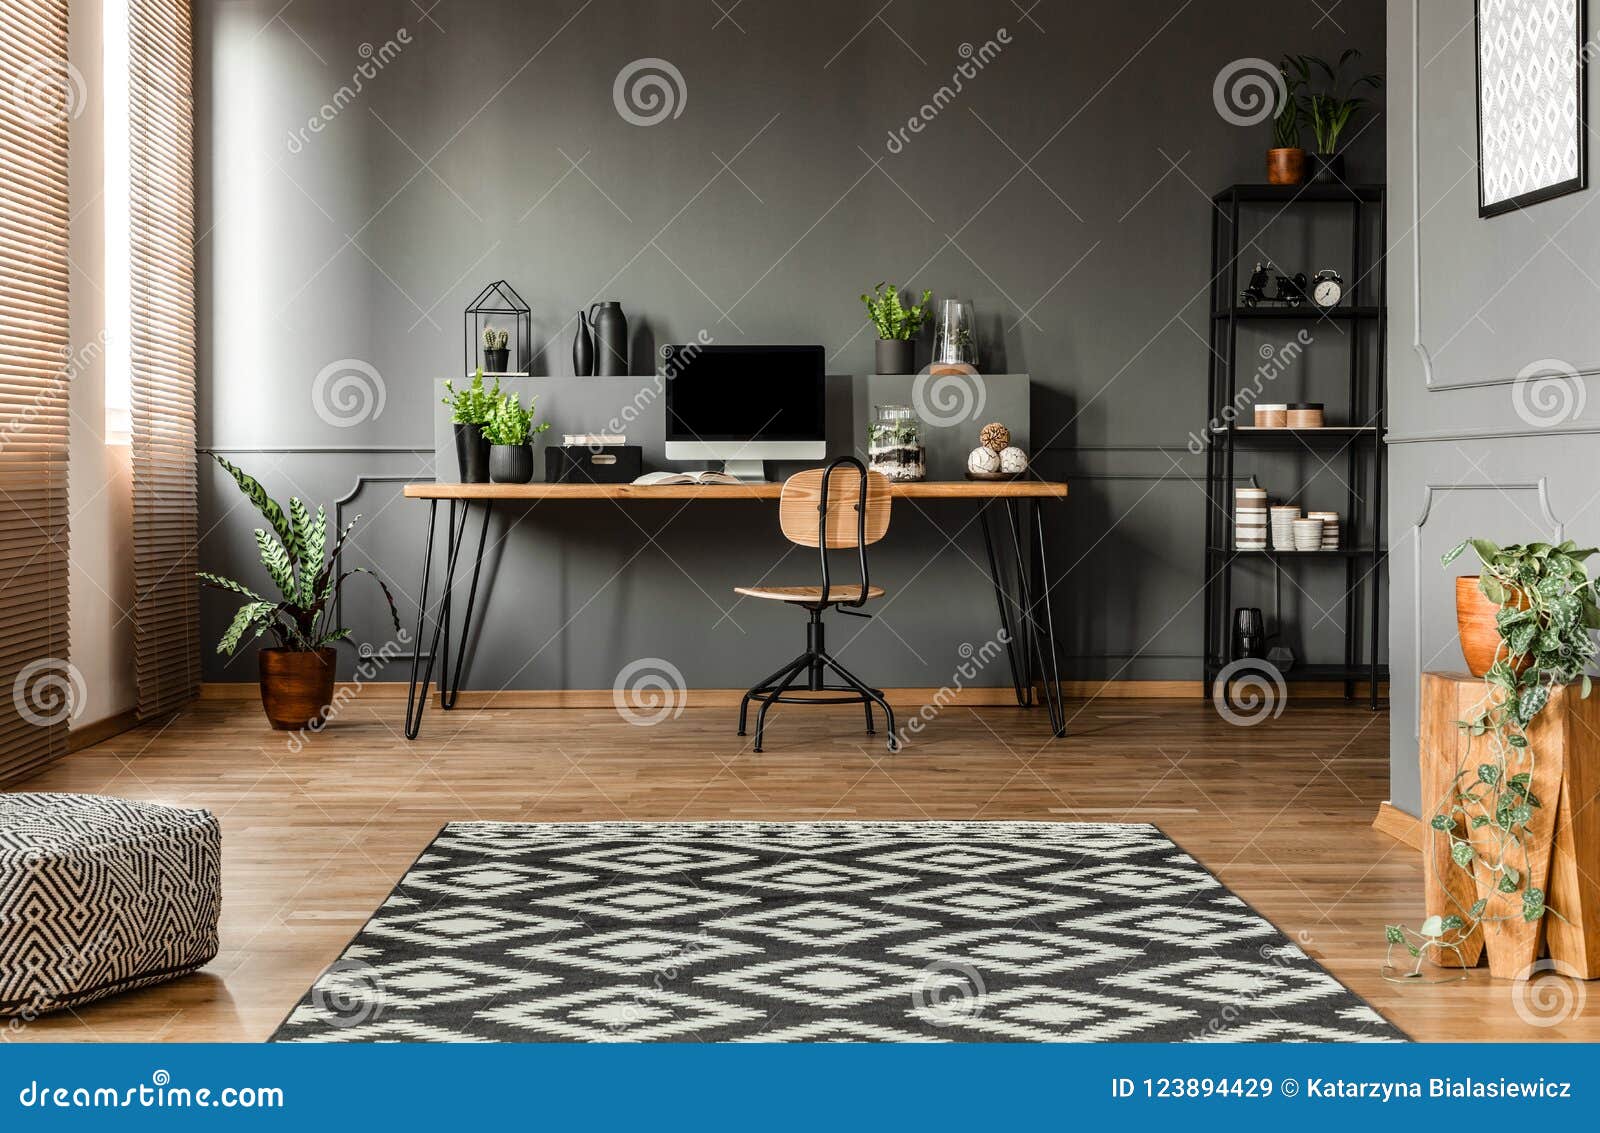 simple grey workspace interior